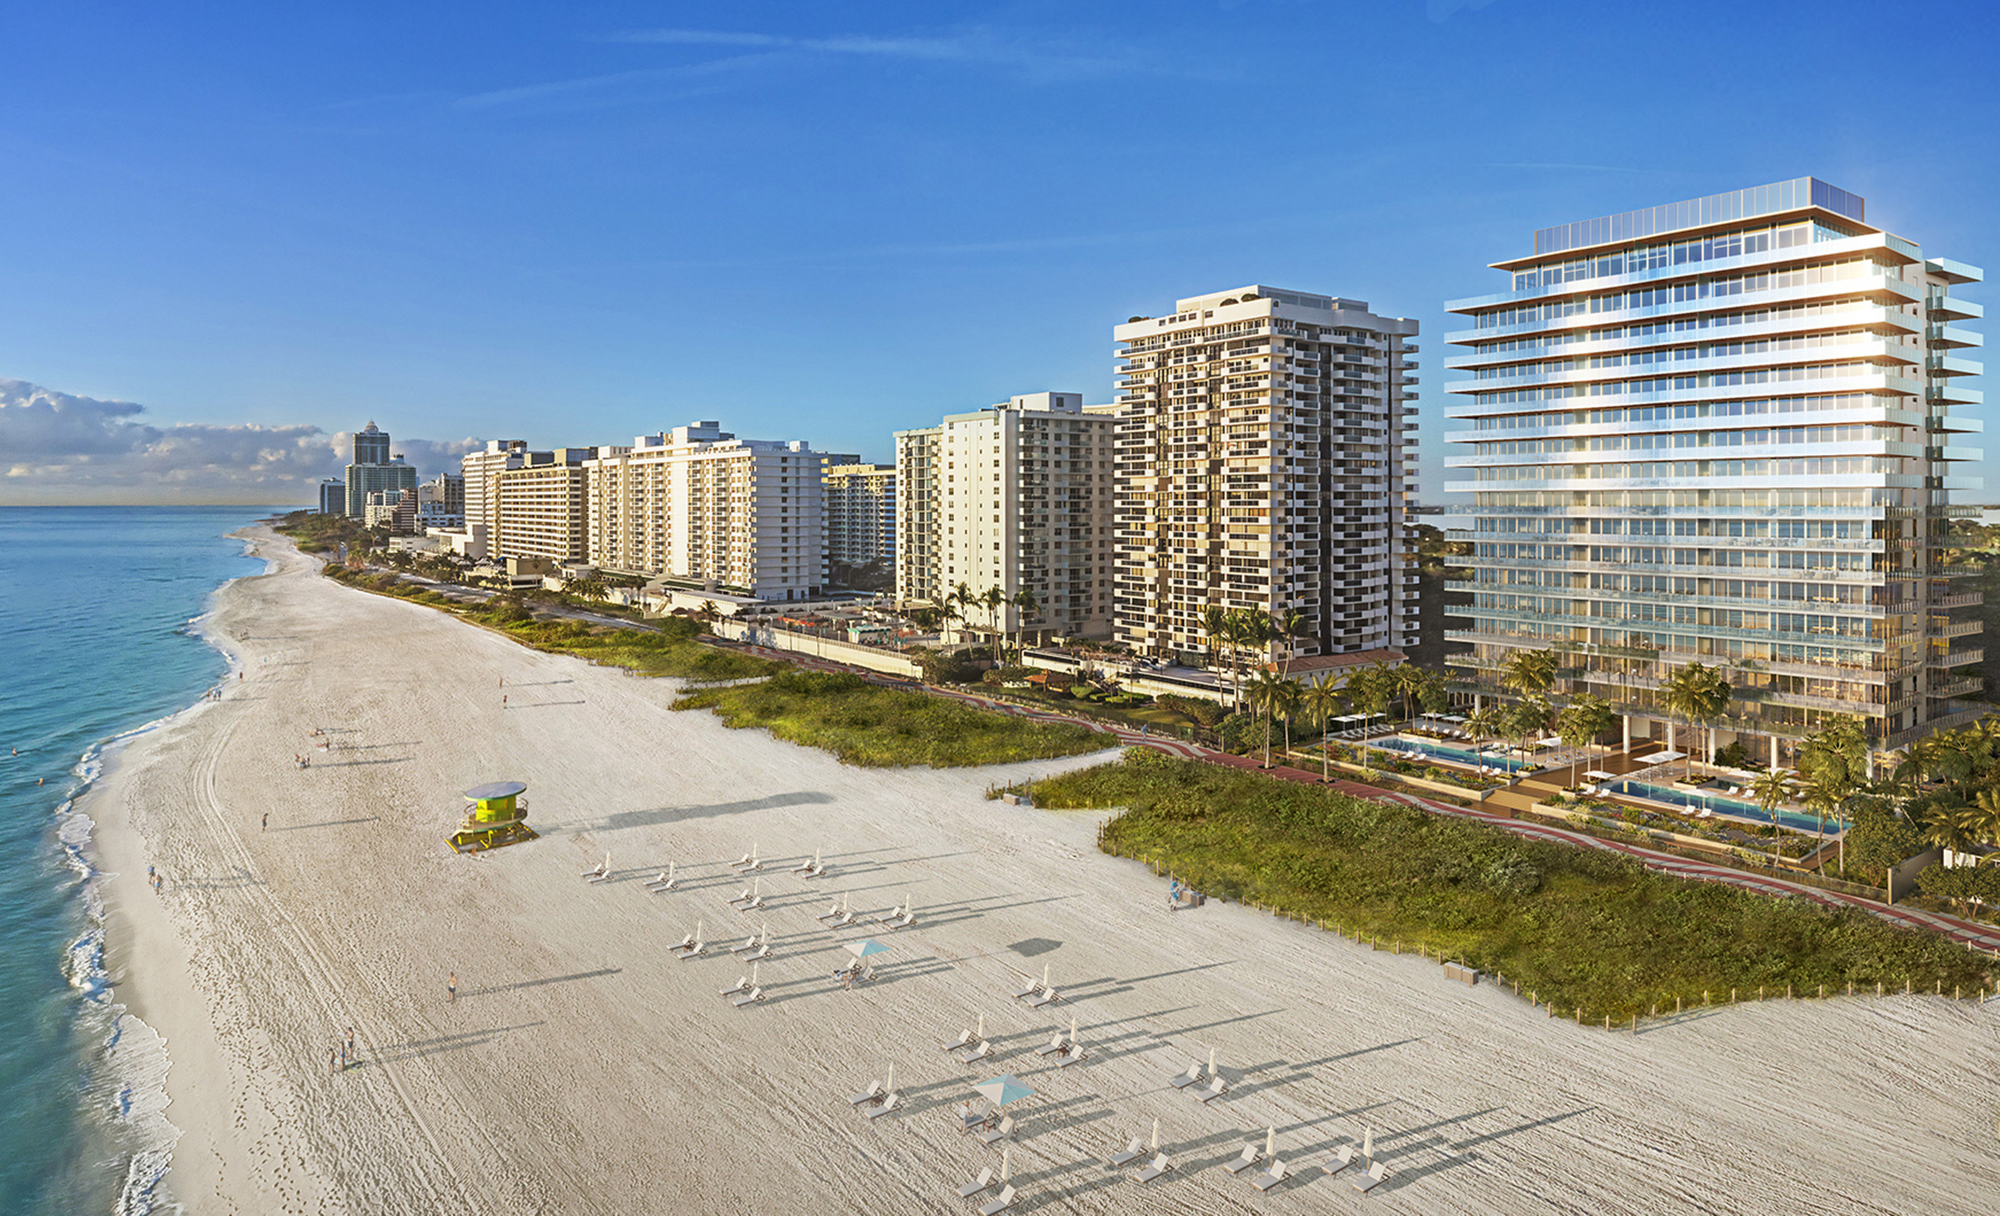 57 Ocean breaks ground in Miami Beach